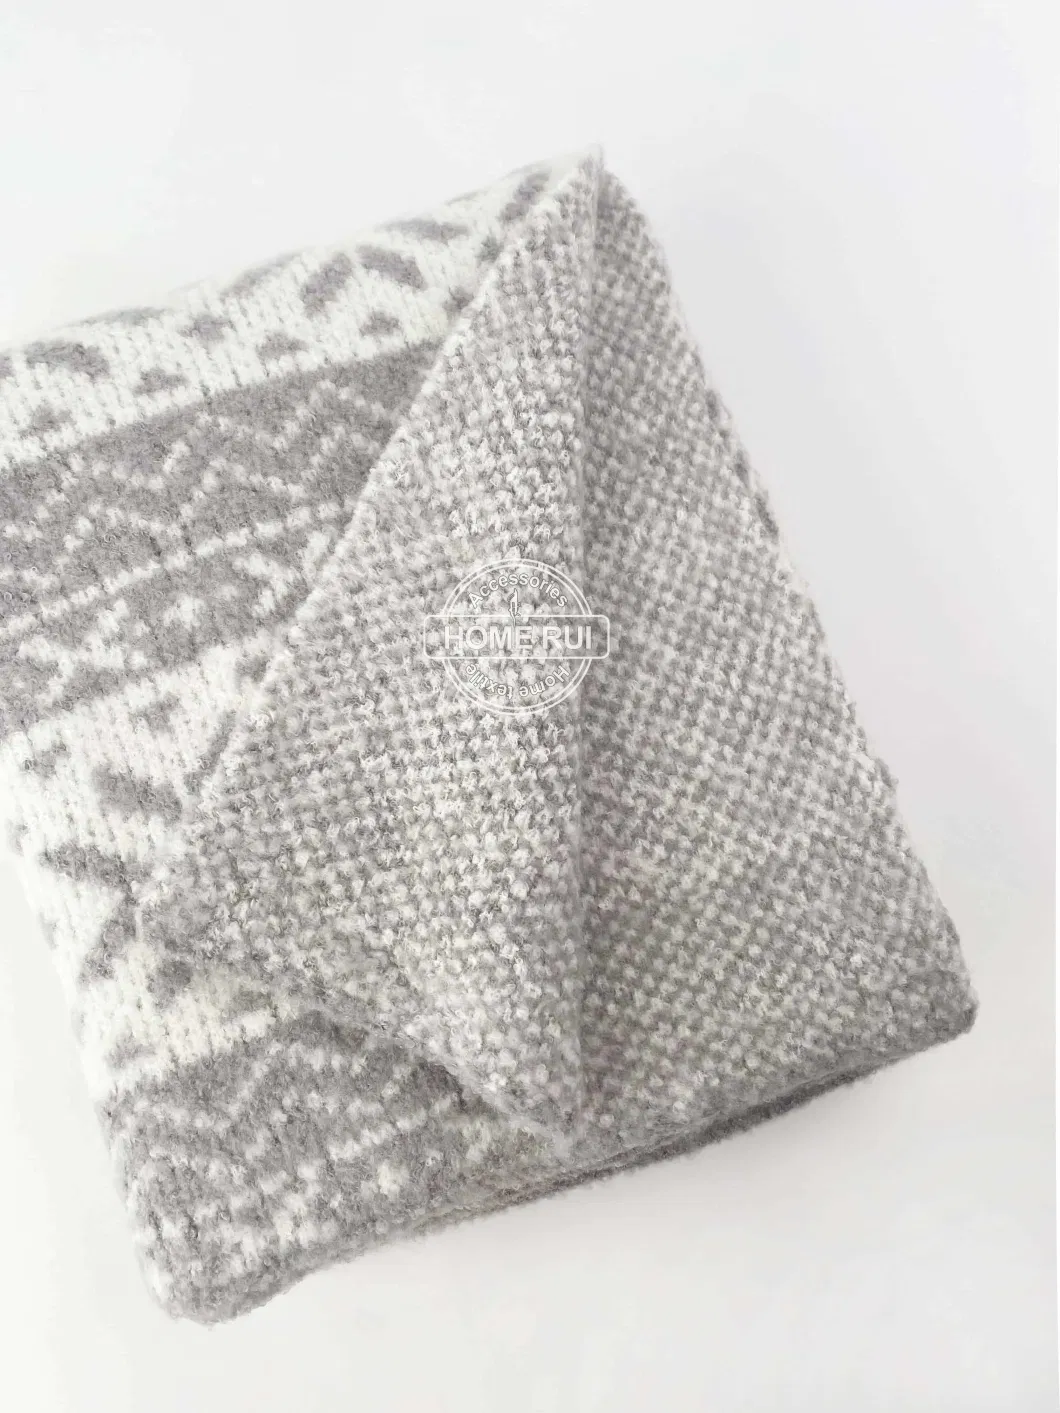 Home Outdoor Travel Bed Sofa Car Soft Warm Grey White Jacquard Fleece Cozy Faire Island Design Throw Blanket Cover